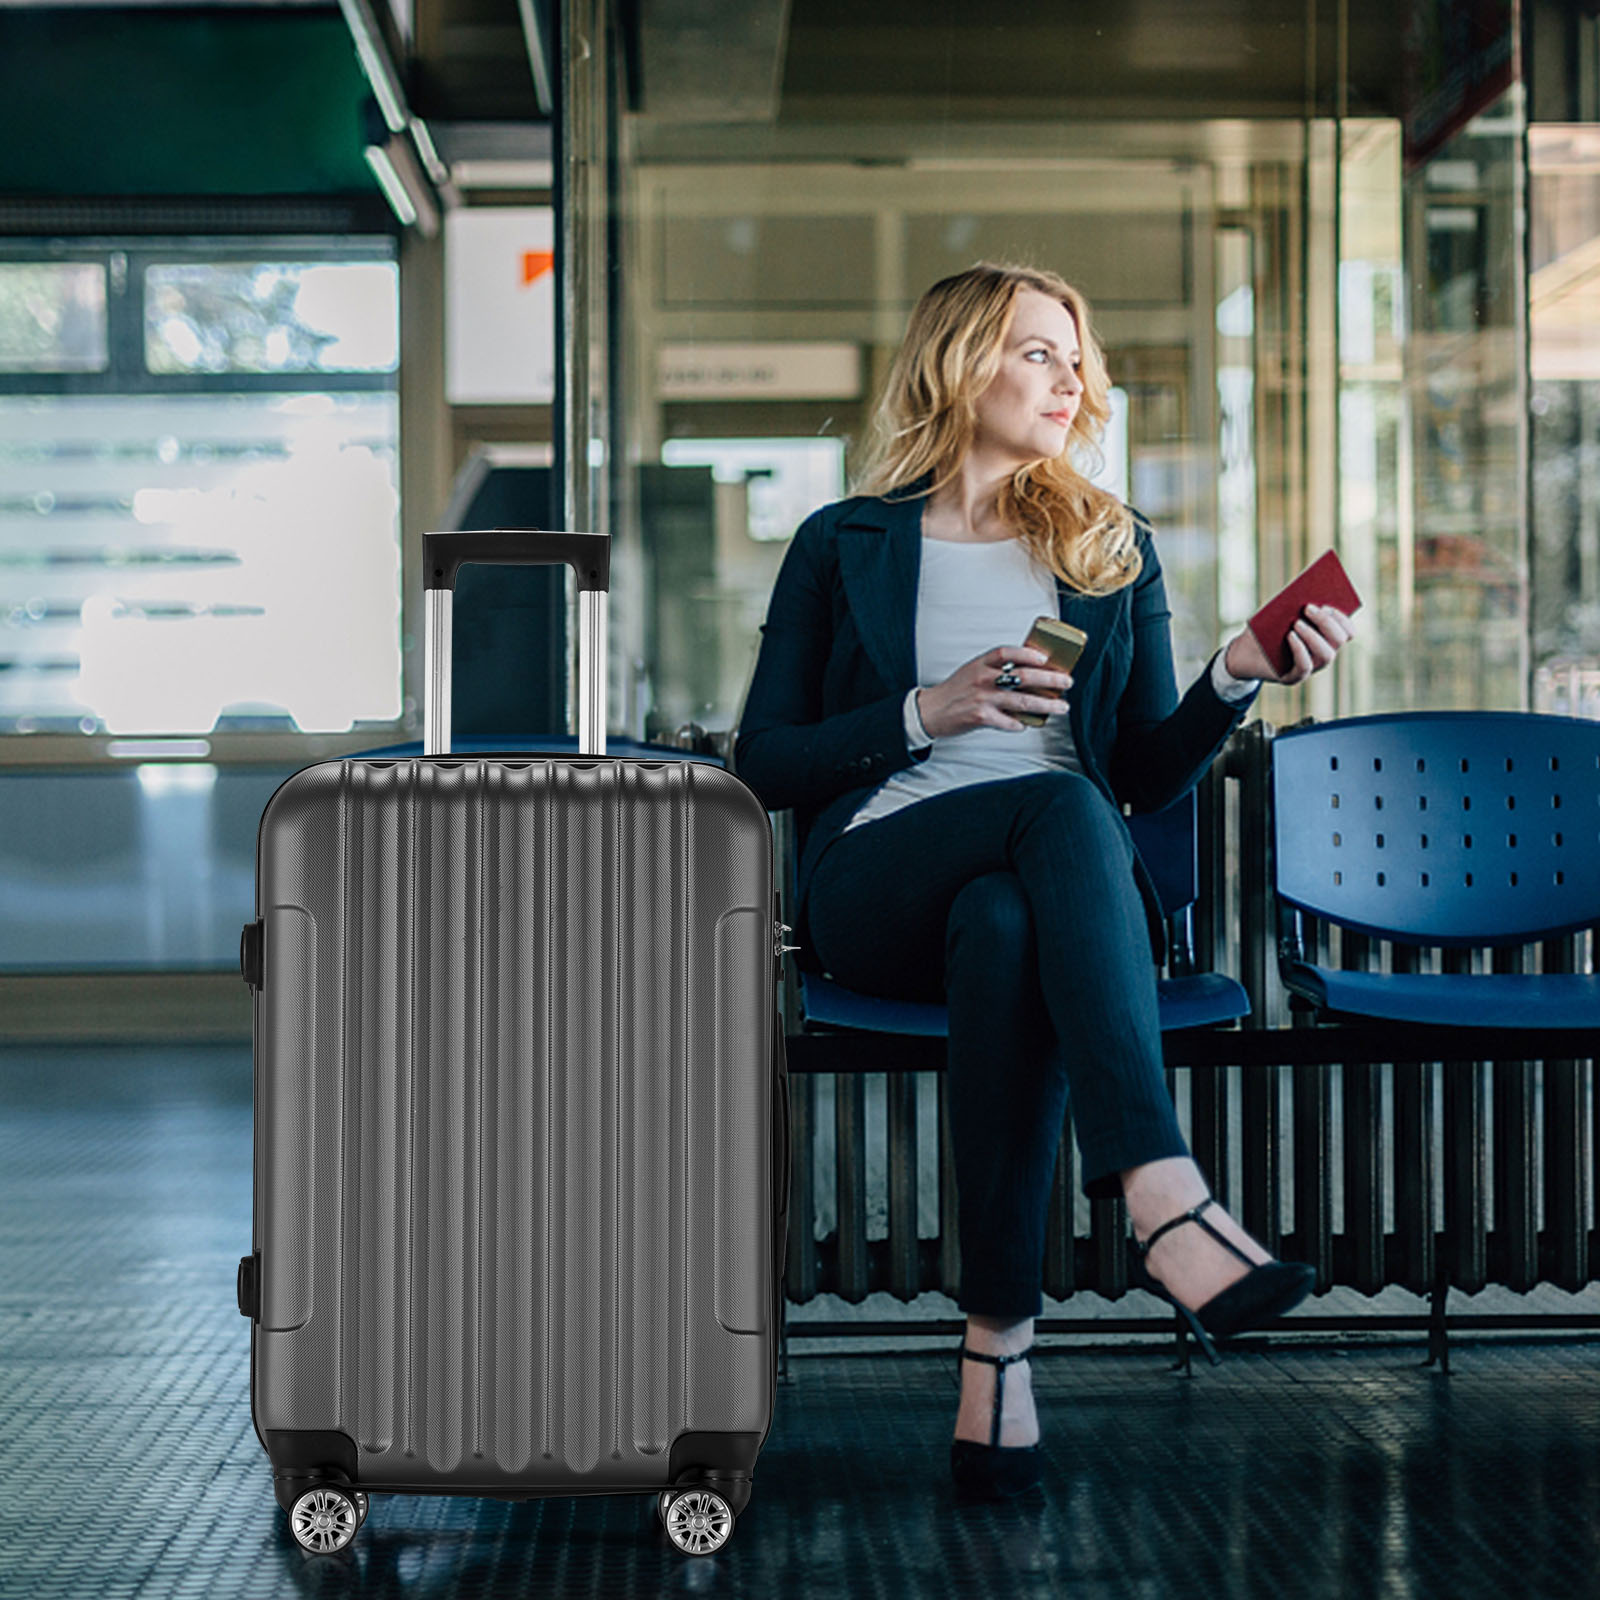 Zimtown 4 Piece Luggage Set, ABS Hard Shell Suitcase Luggage Sets Double Wheels with TSA Lock, Dark Gray - image 3 of 12